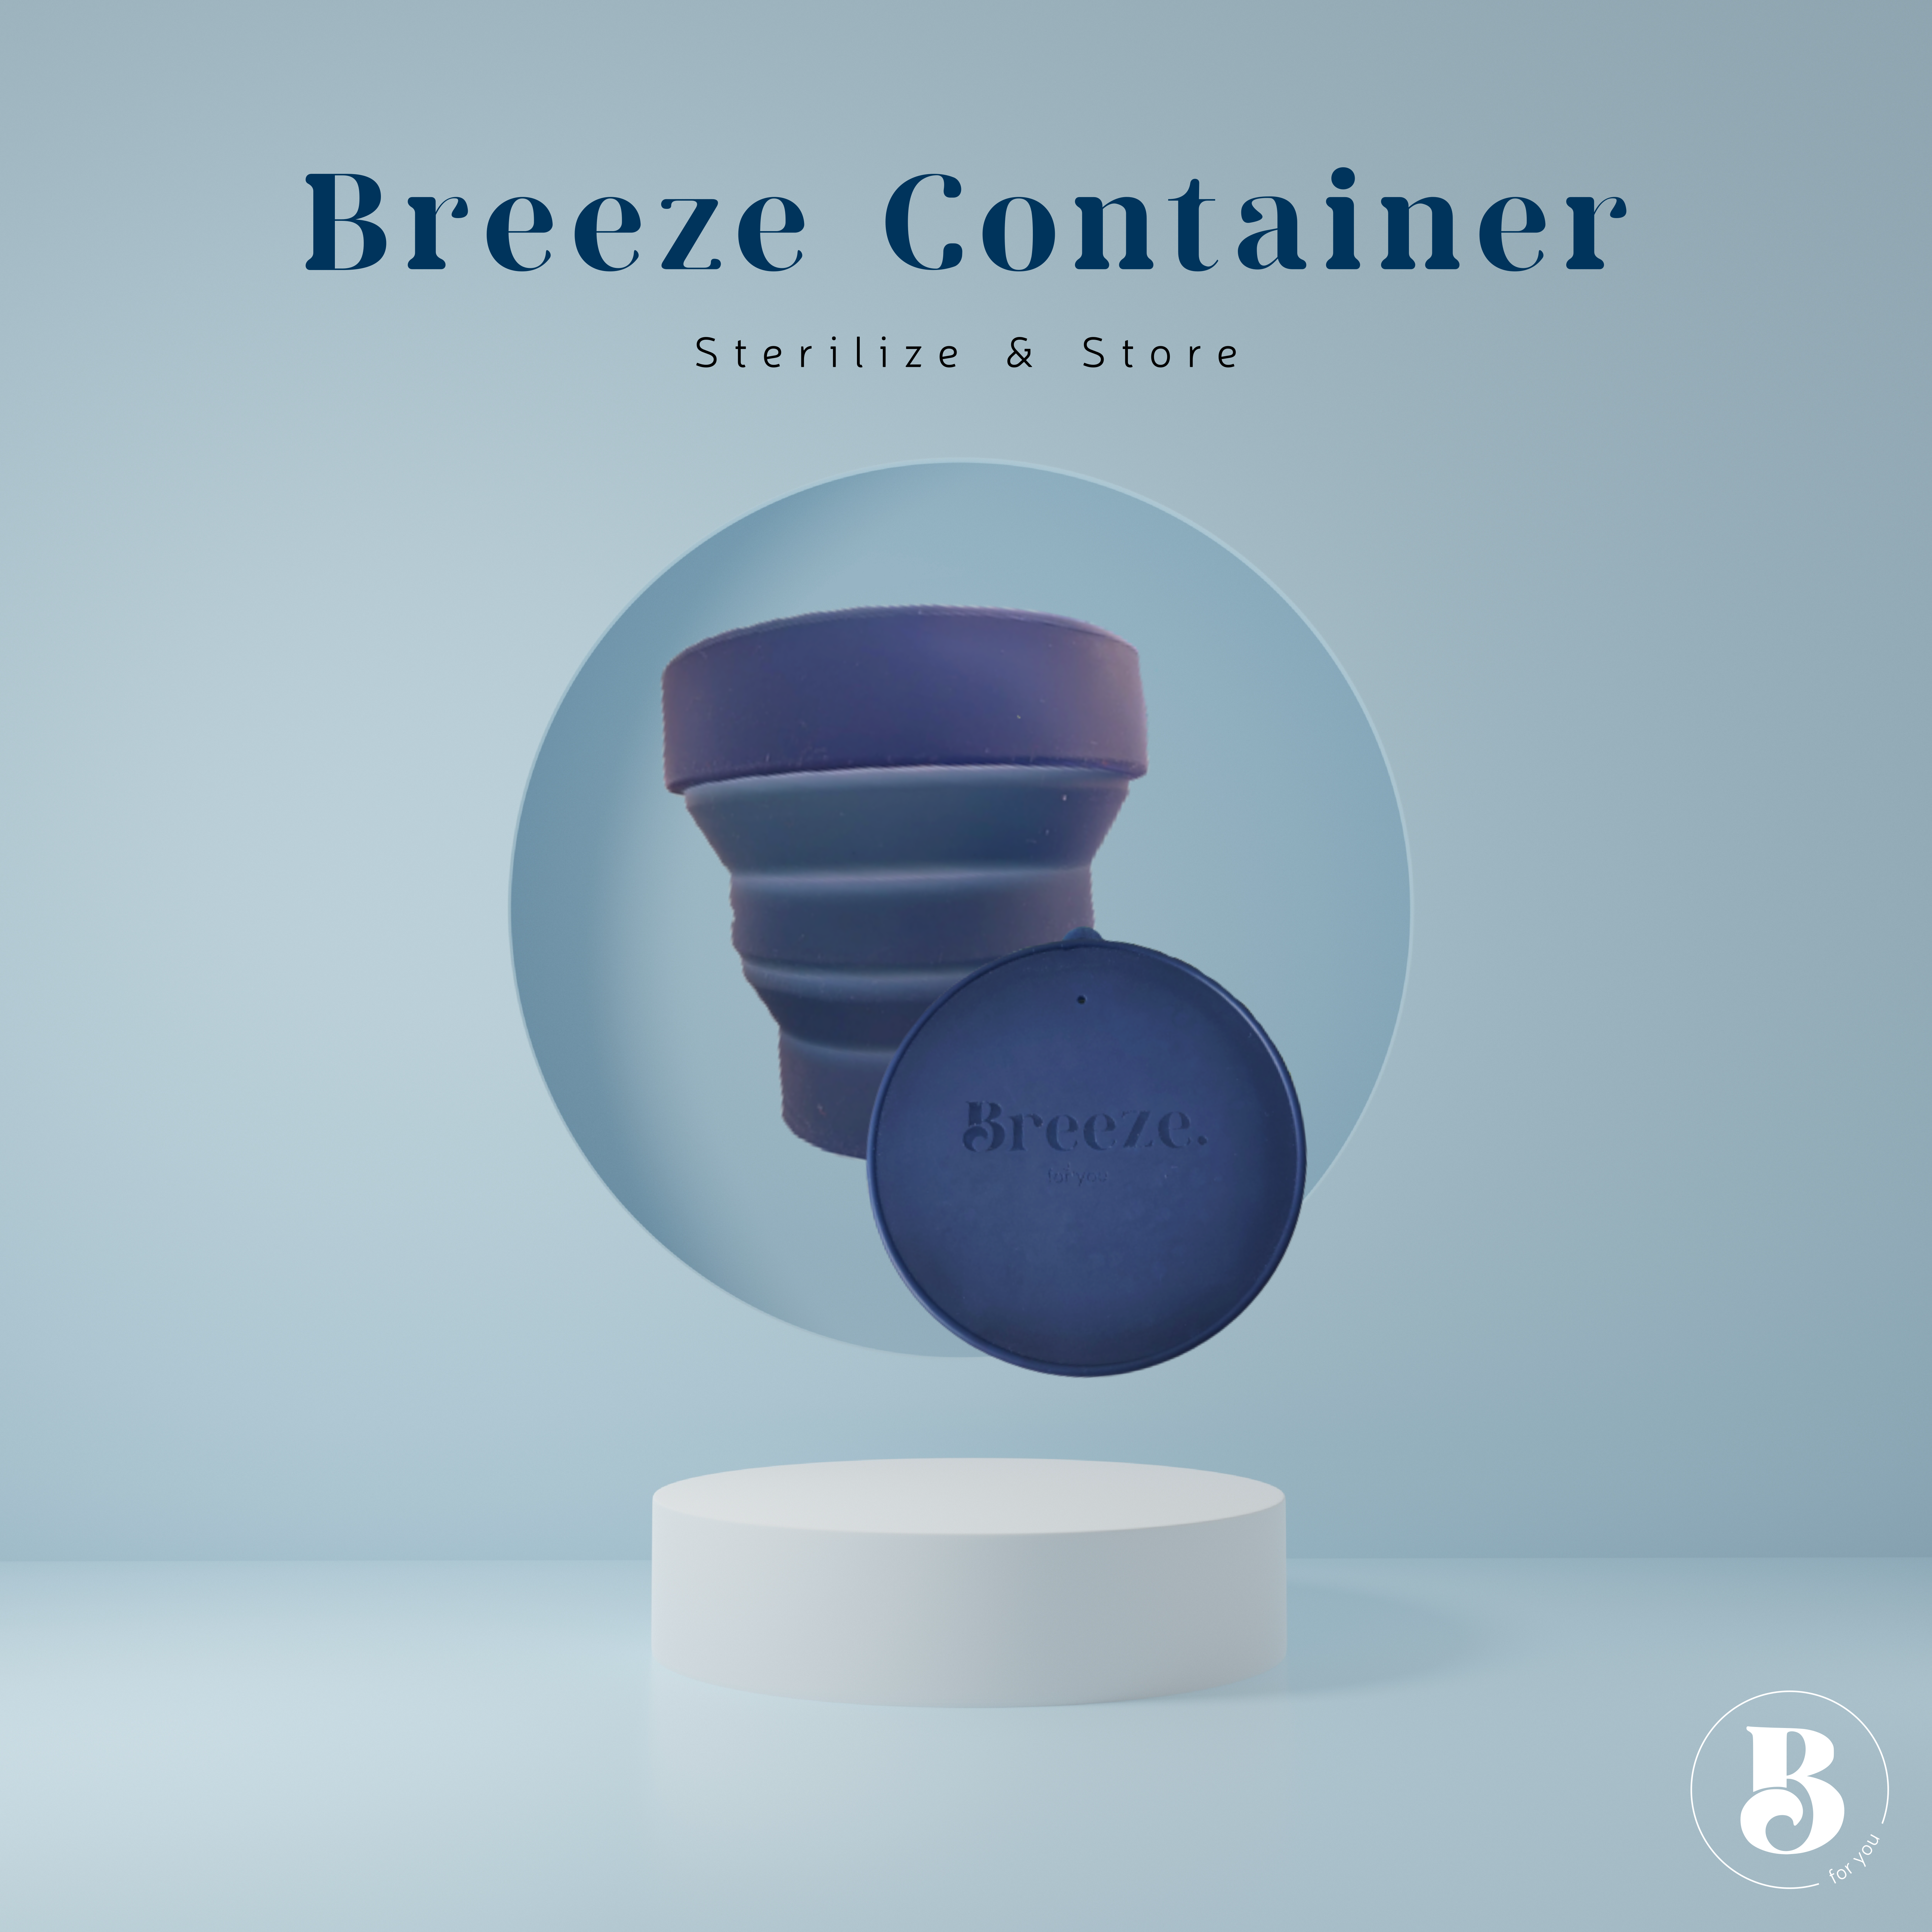 Breeze Container